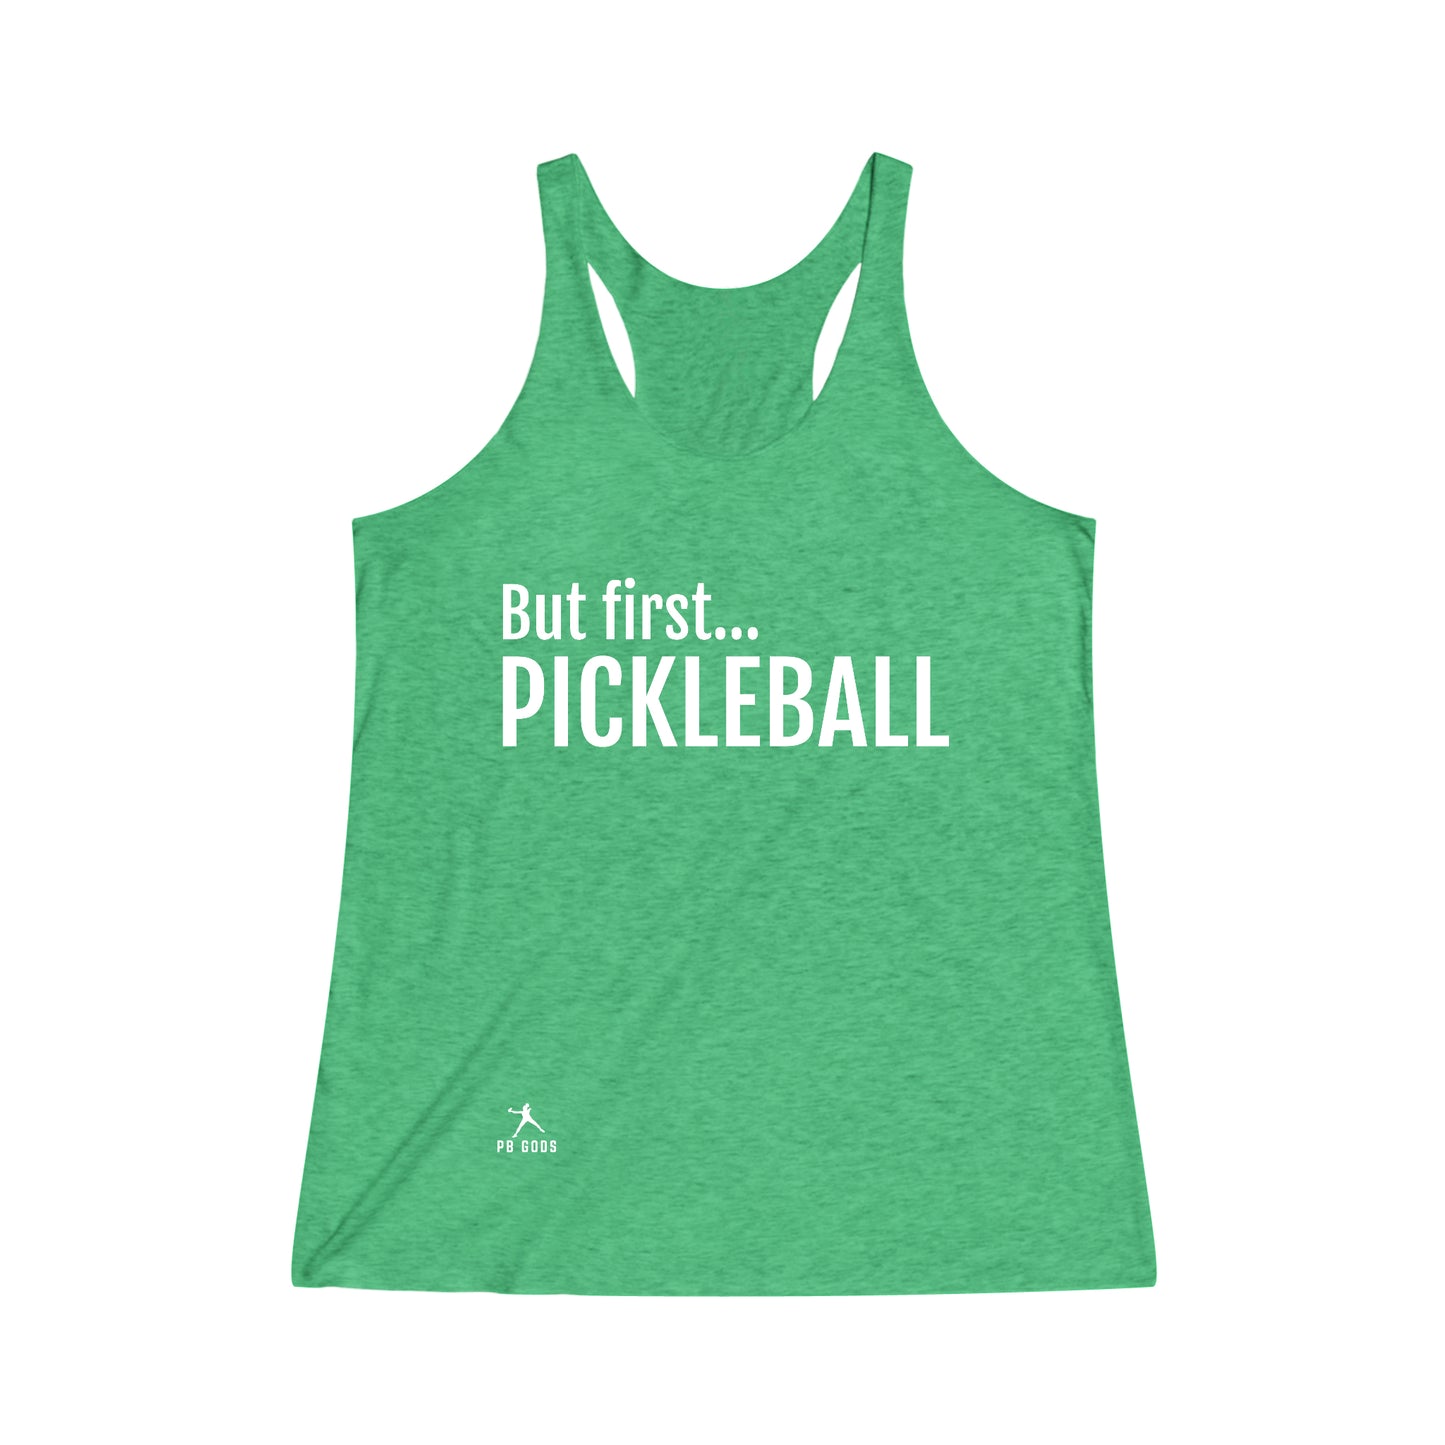 But first...PICKLEBALL Women's Tri-Blend Racerback Tank - Dark Colors